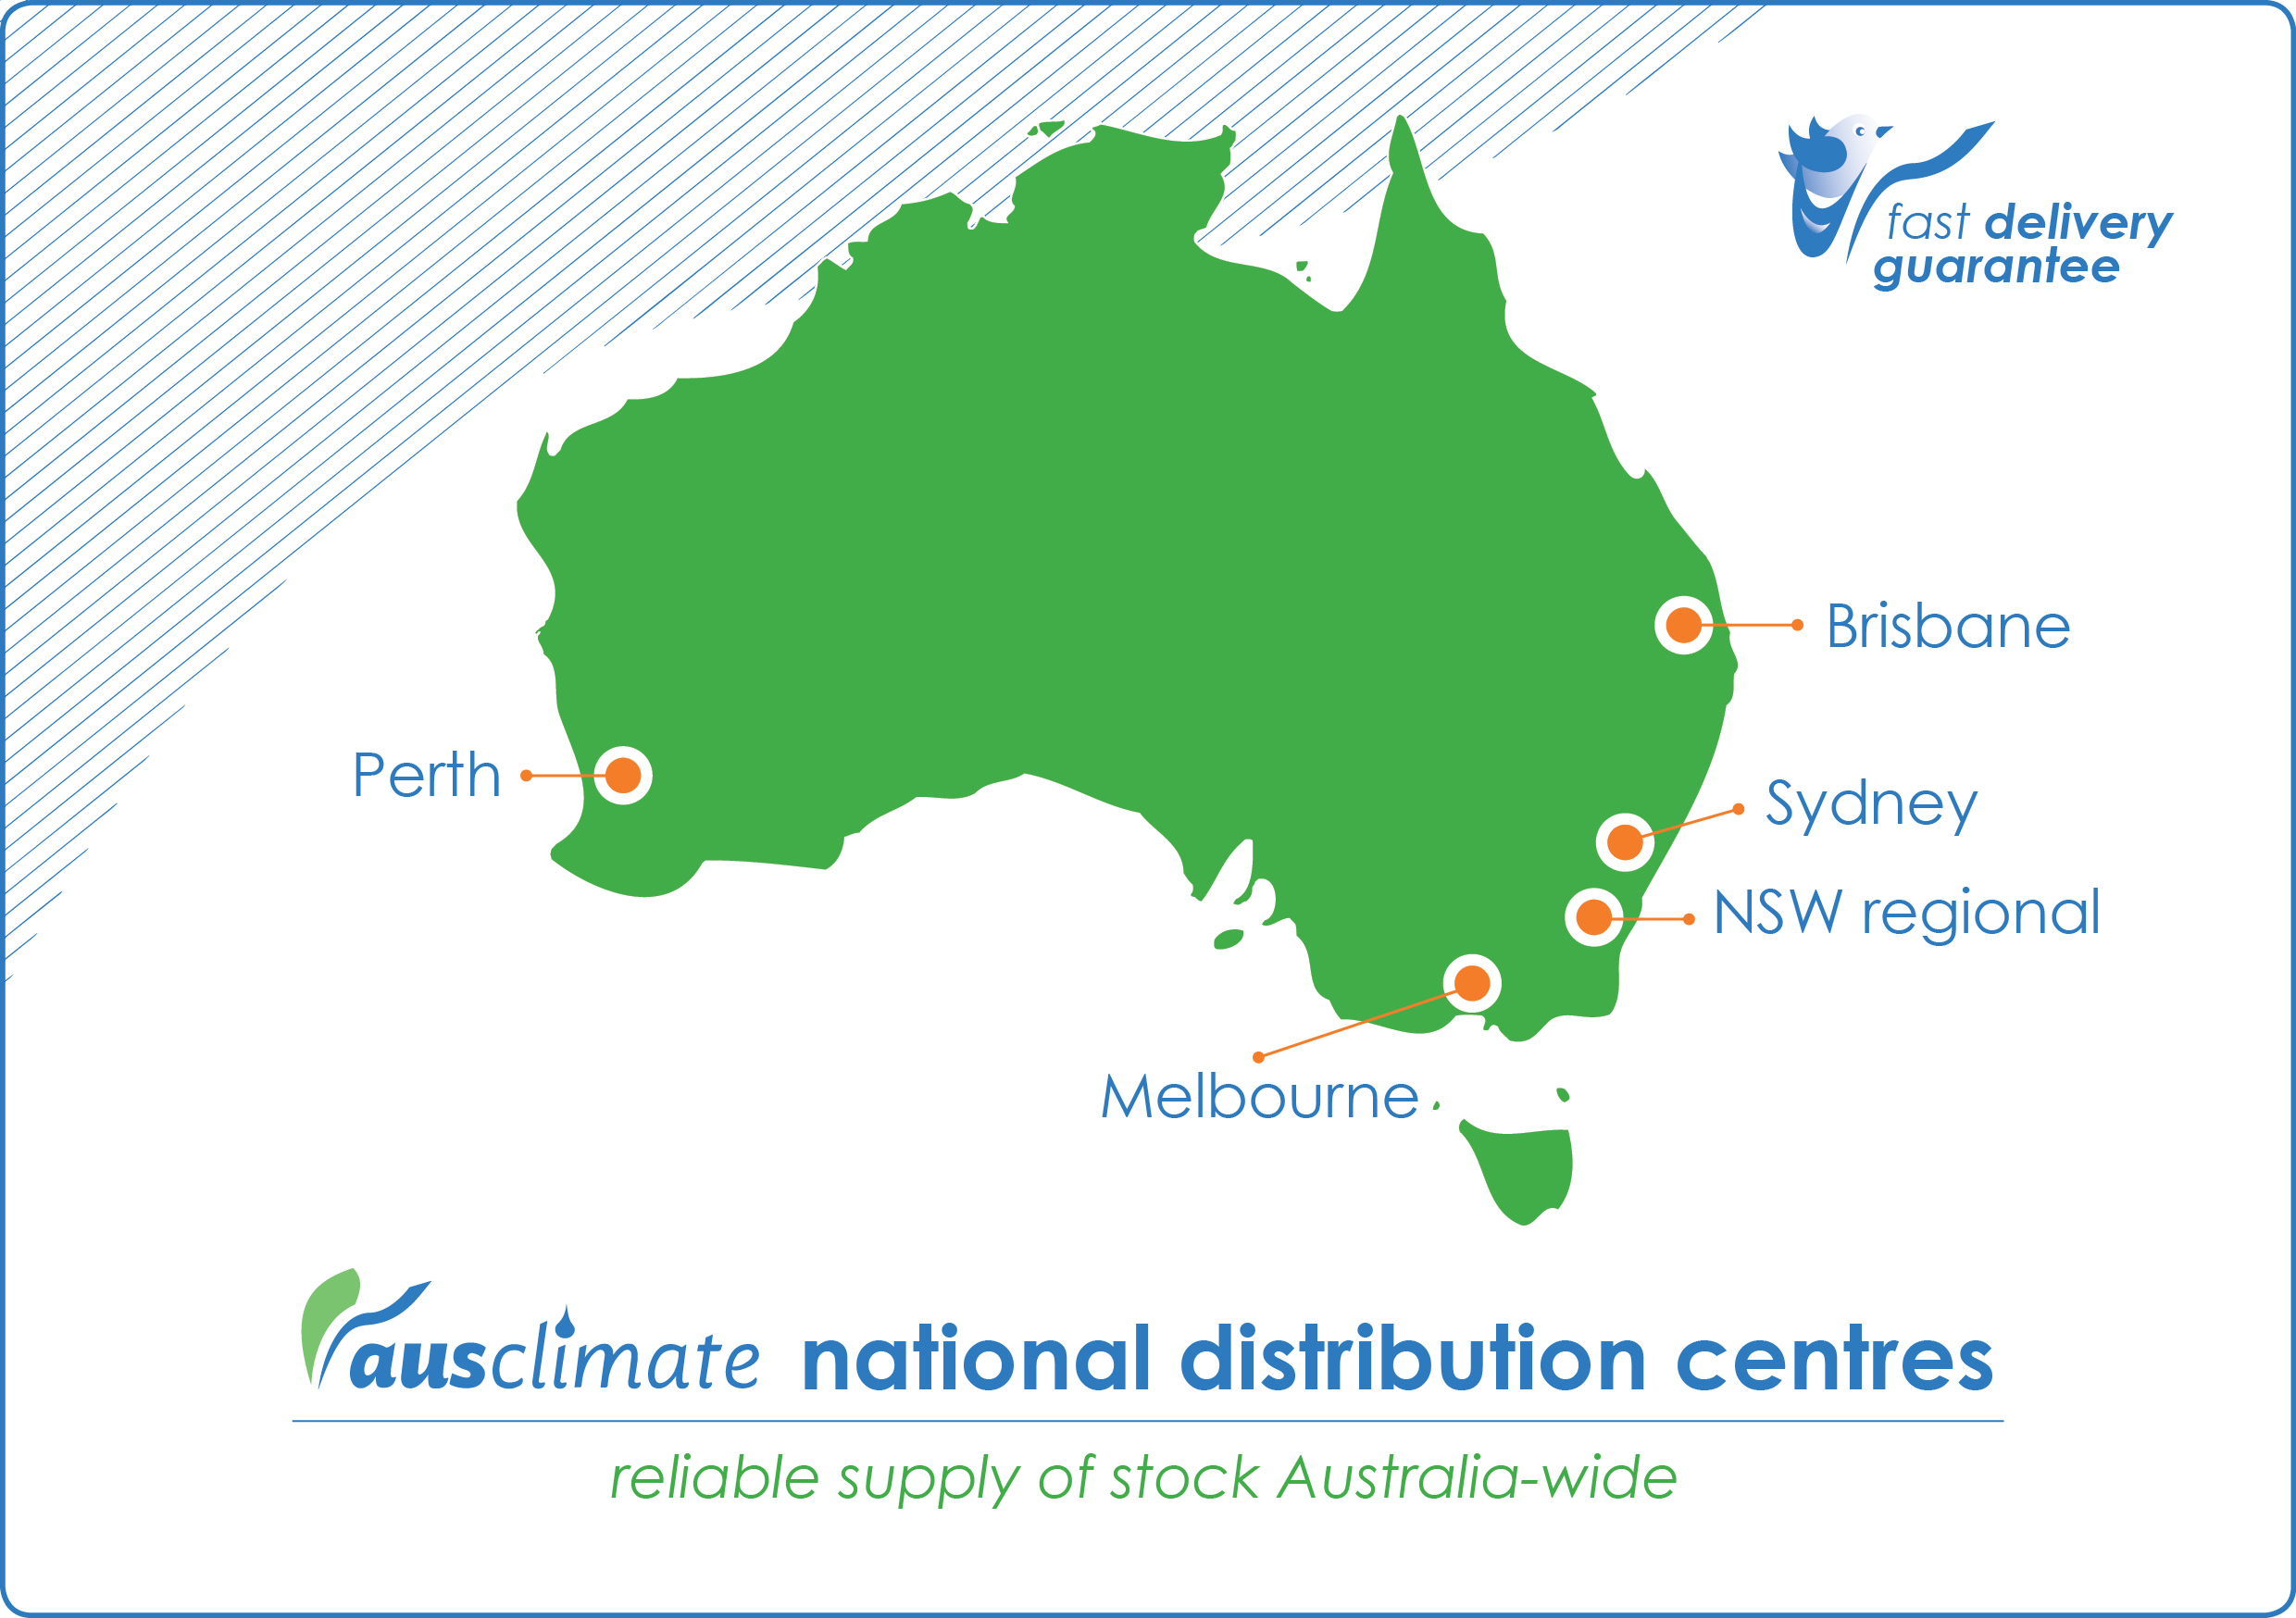 Ausclimate National Distribution Centres